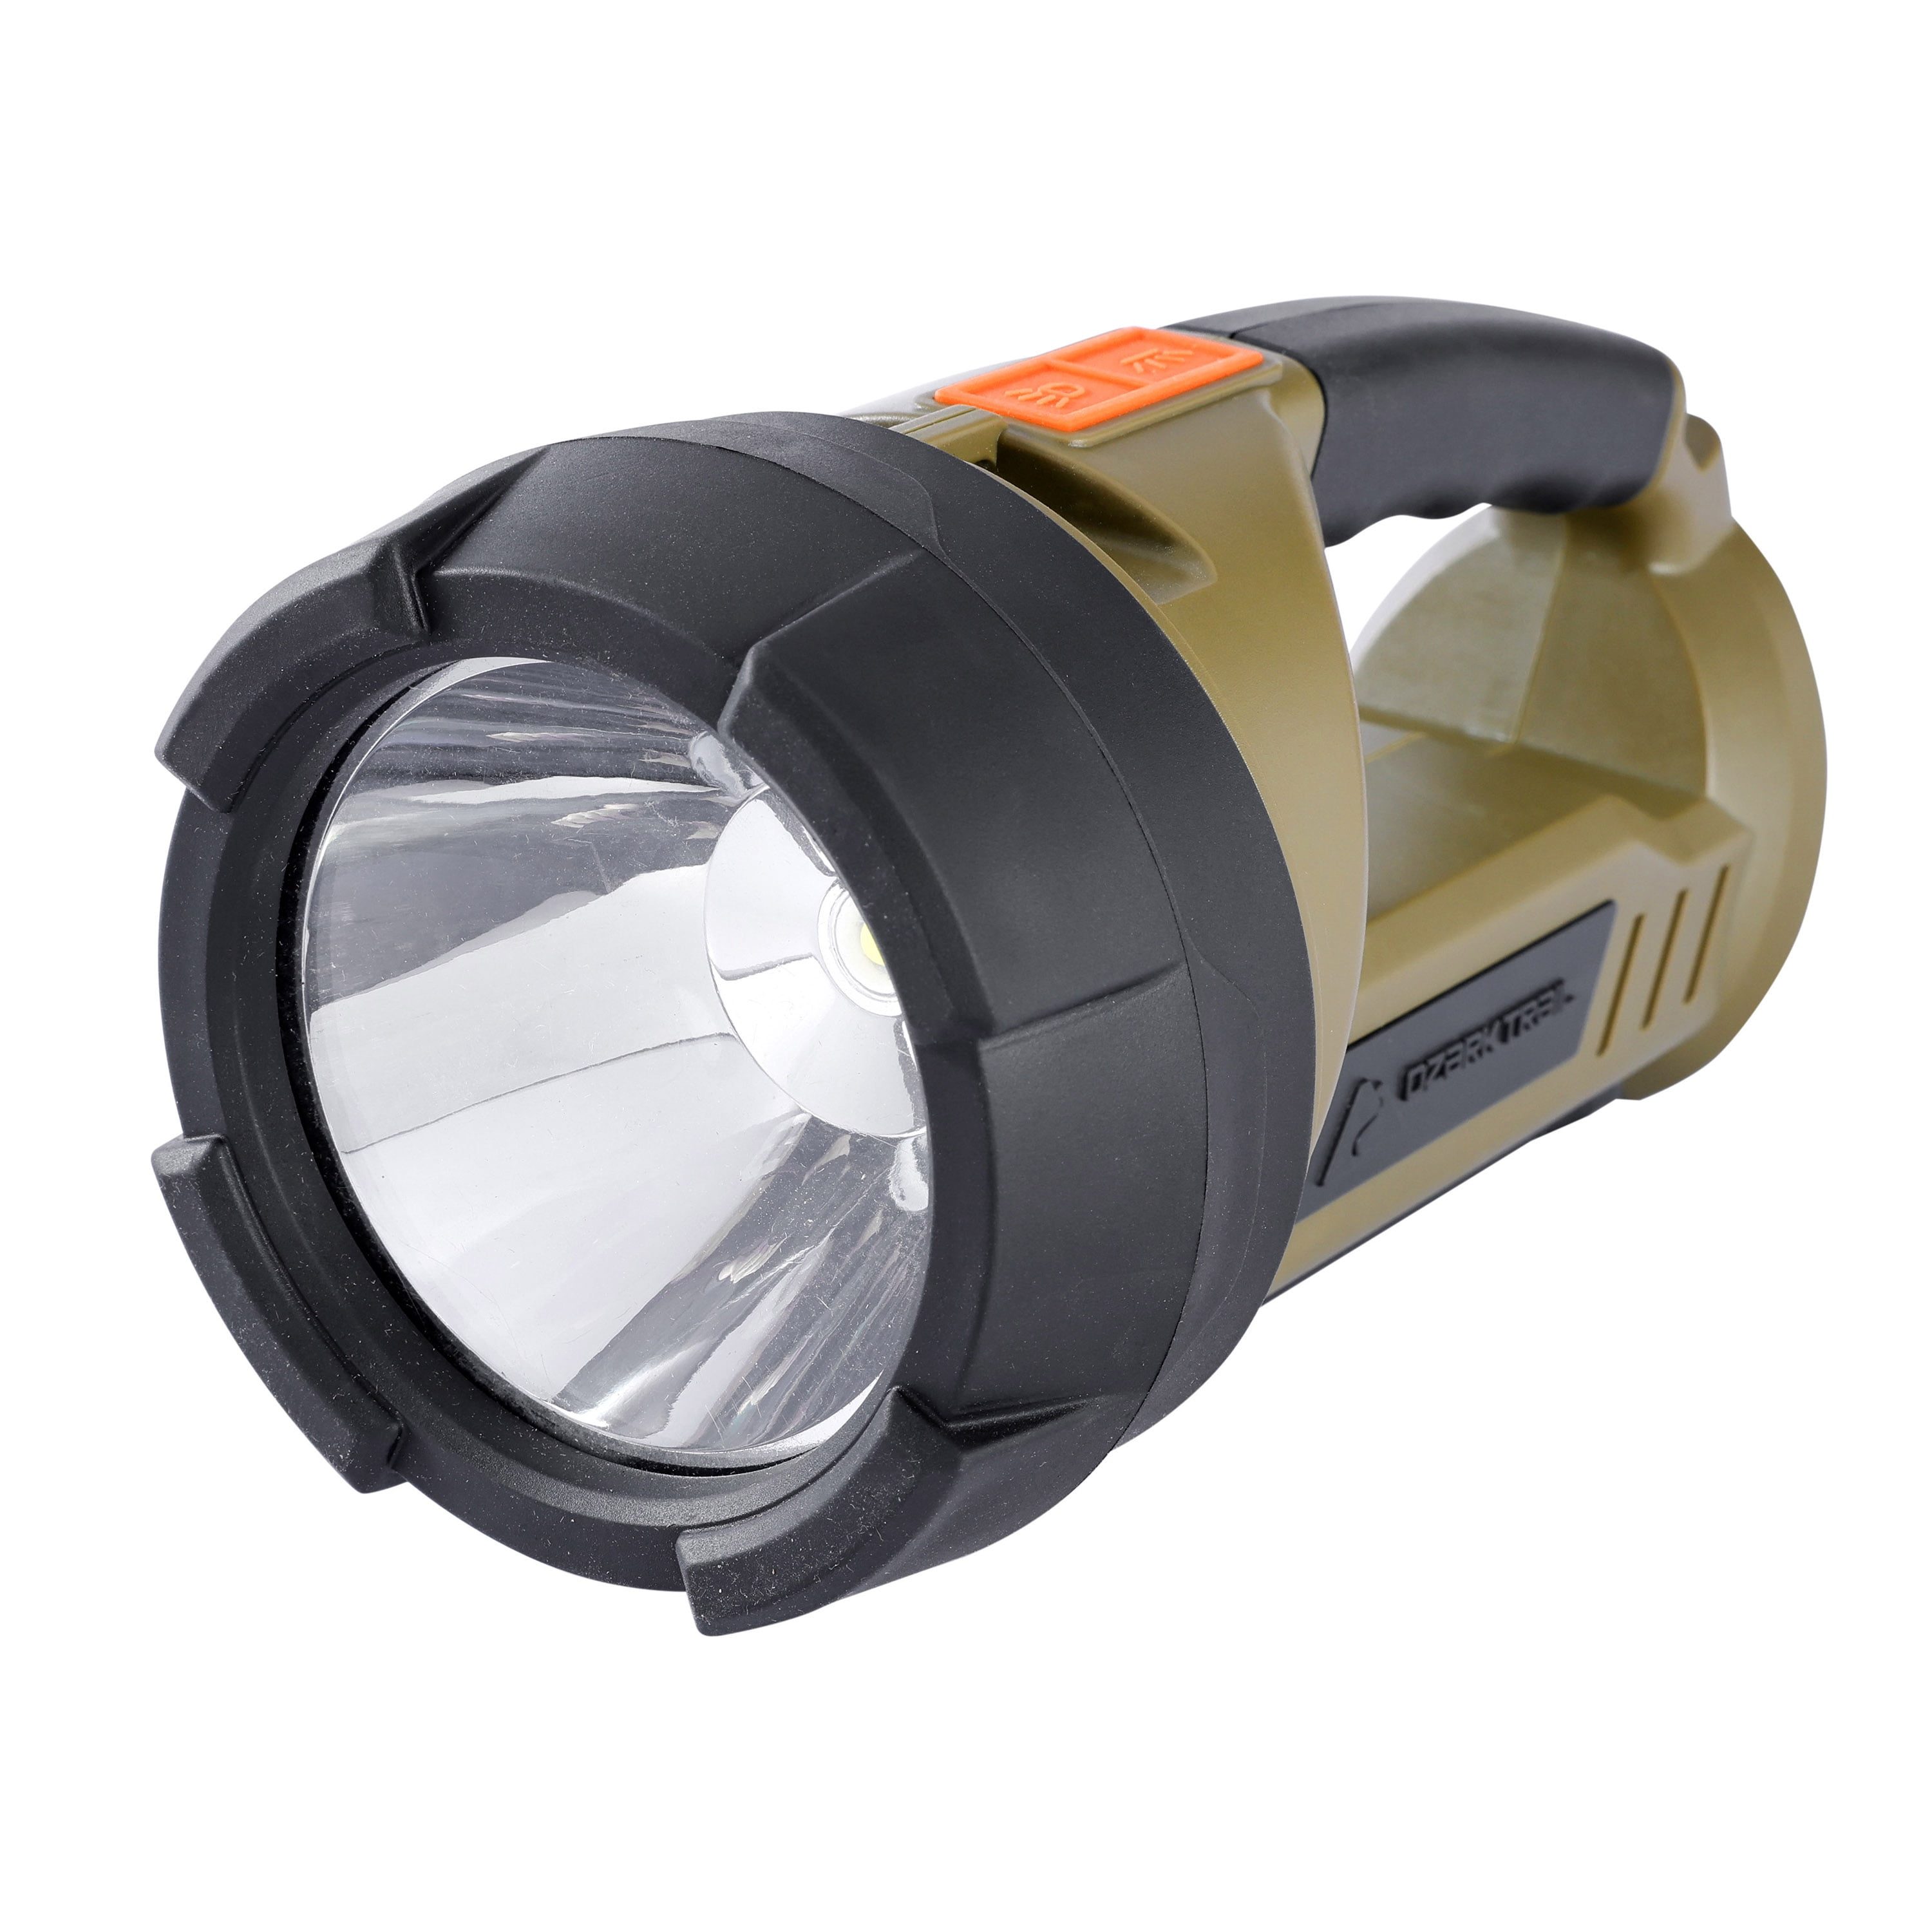 ADD-ONE Dual Light 250 lumens XPE